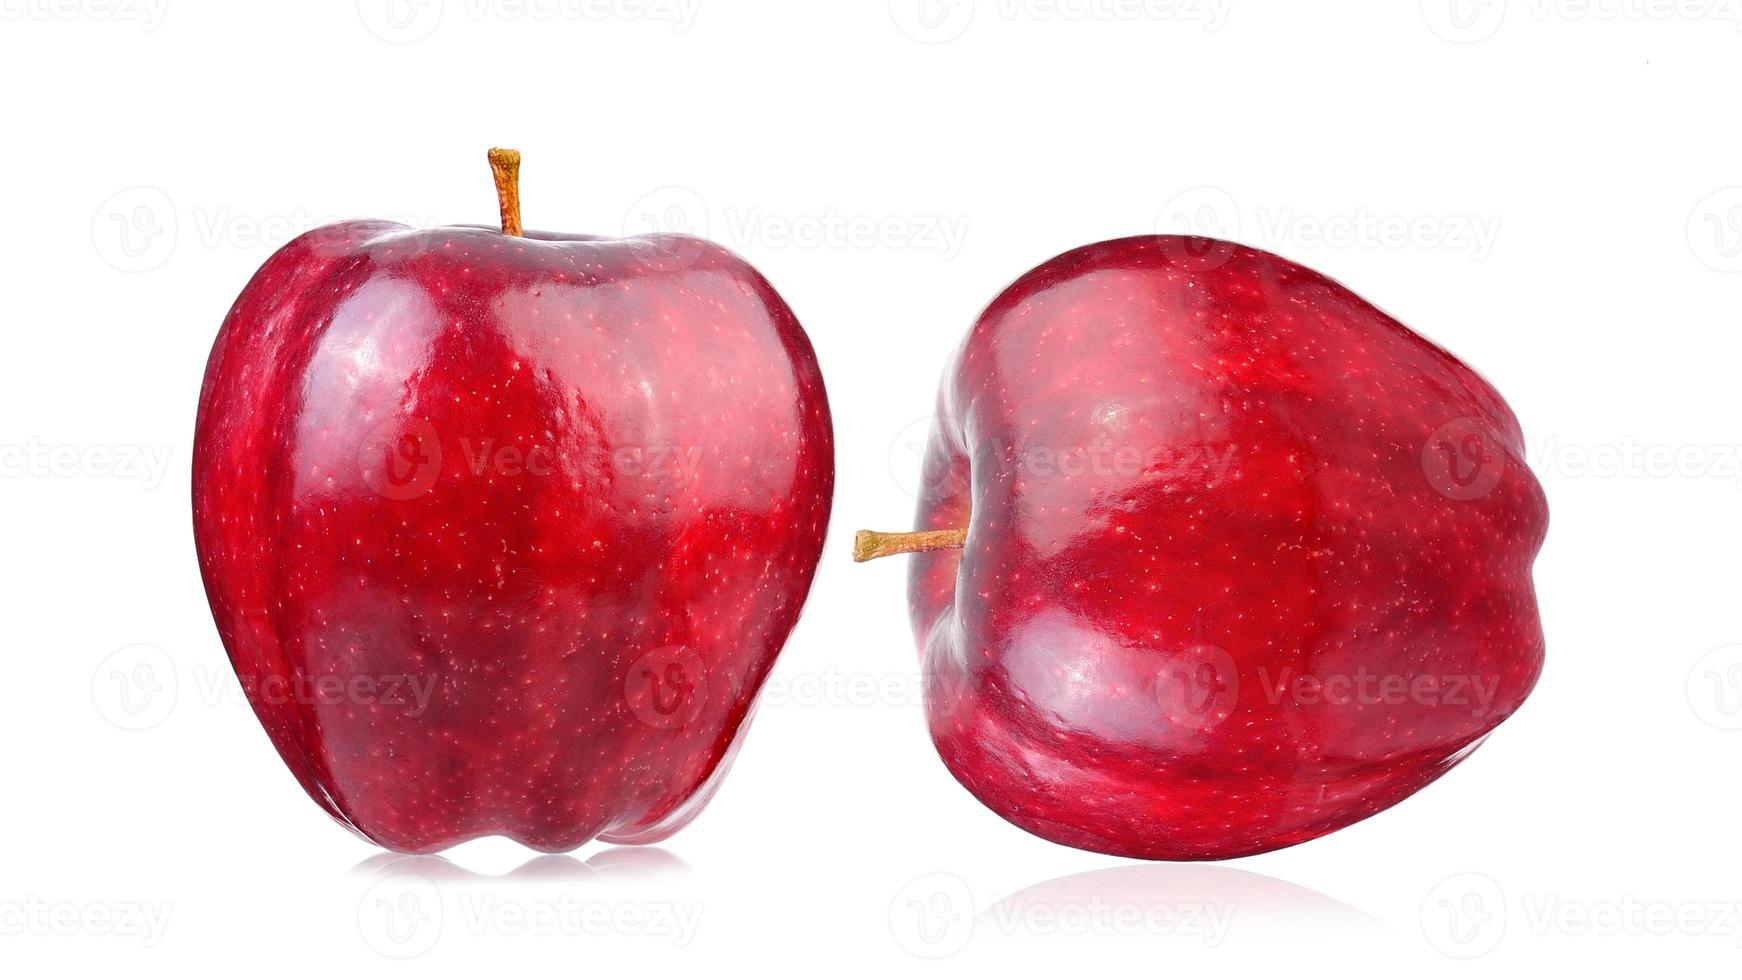 mela rossa su sfondo bianco foto